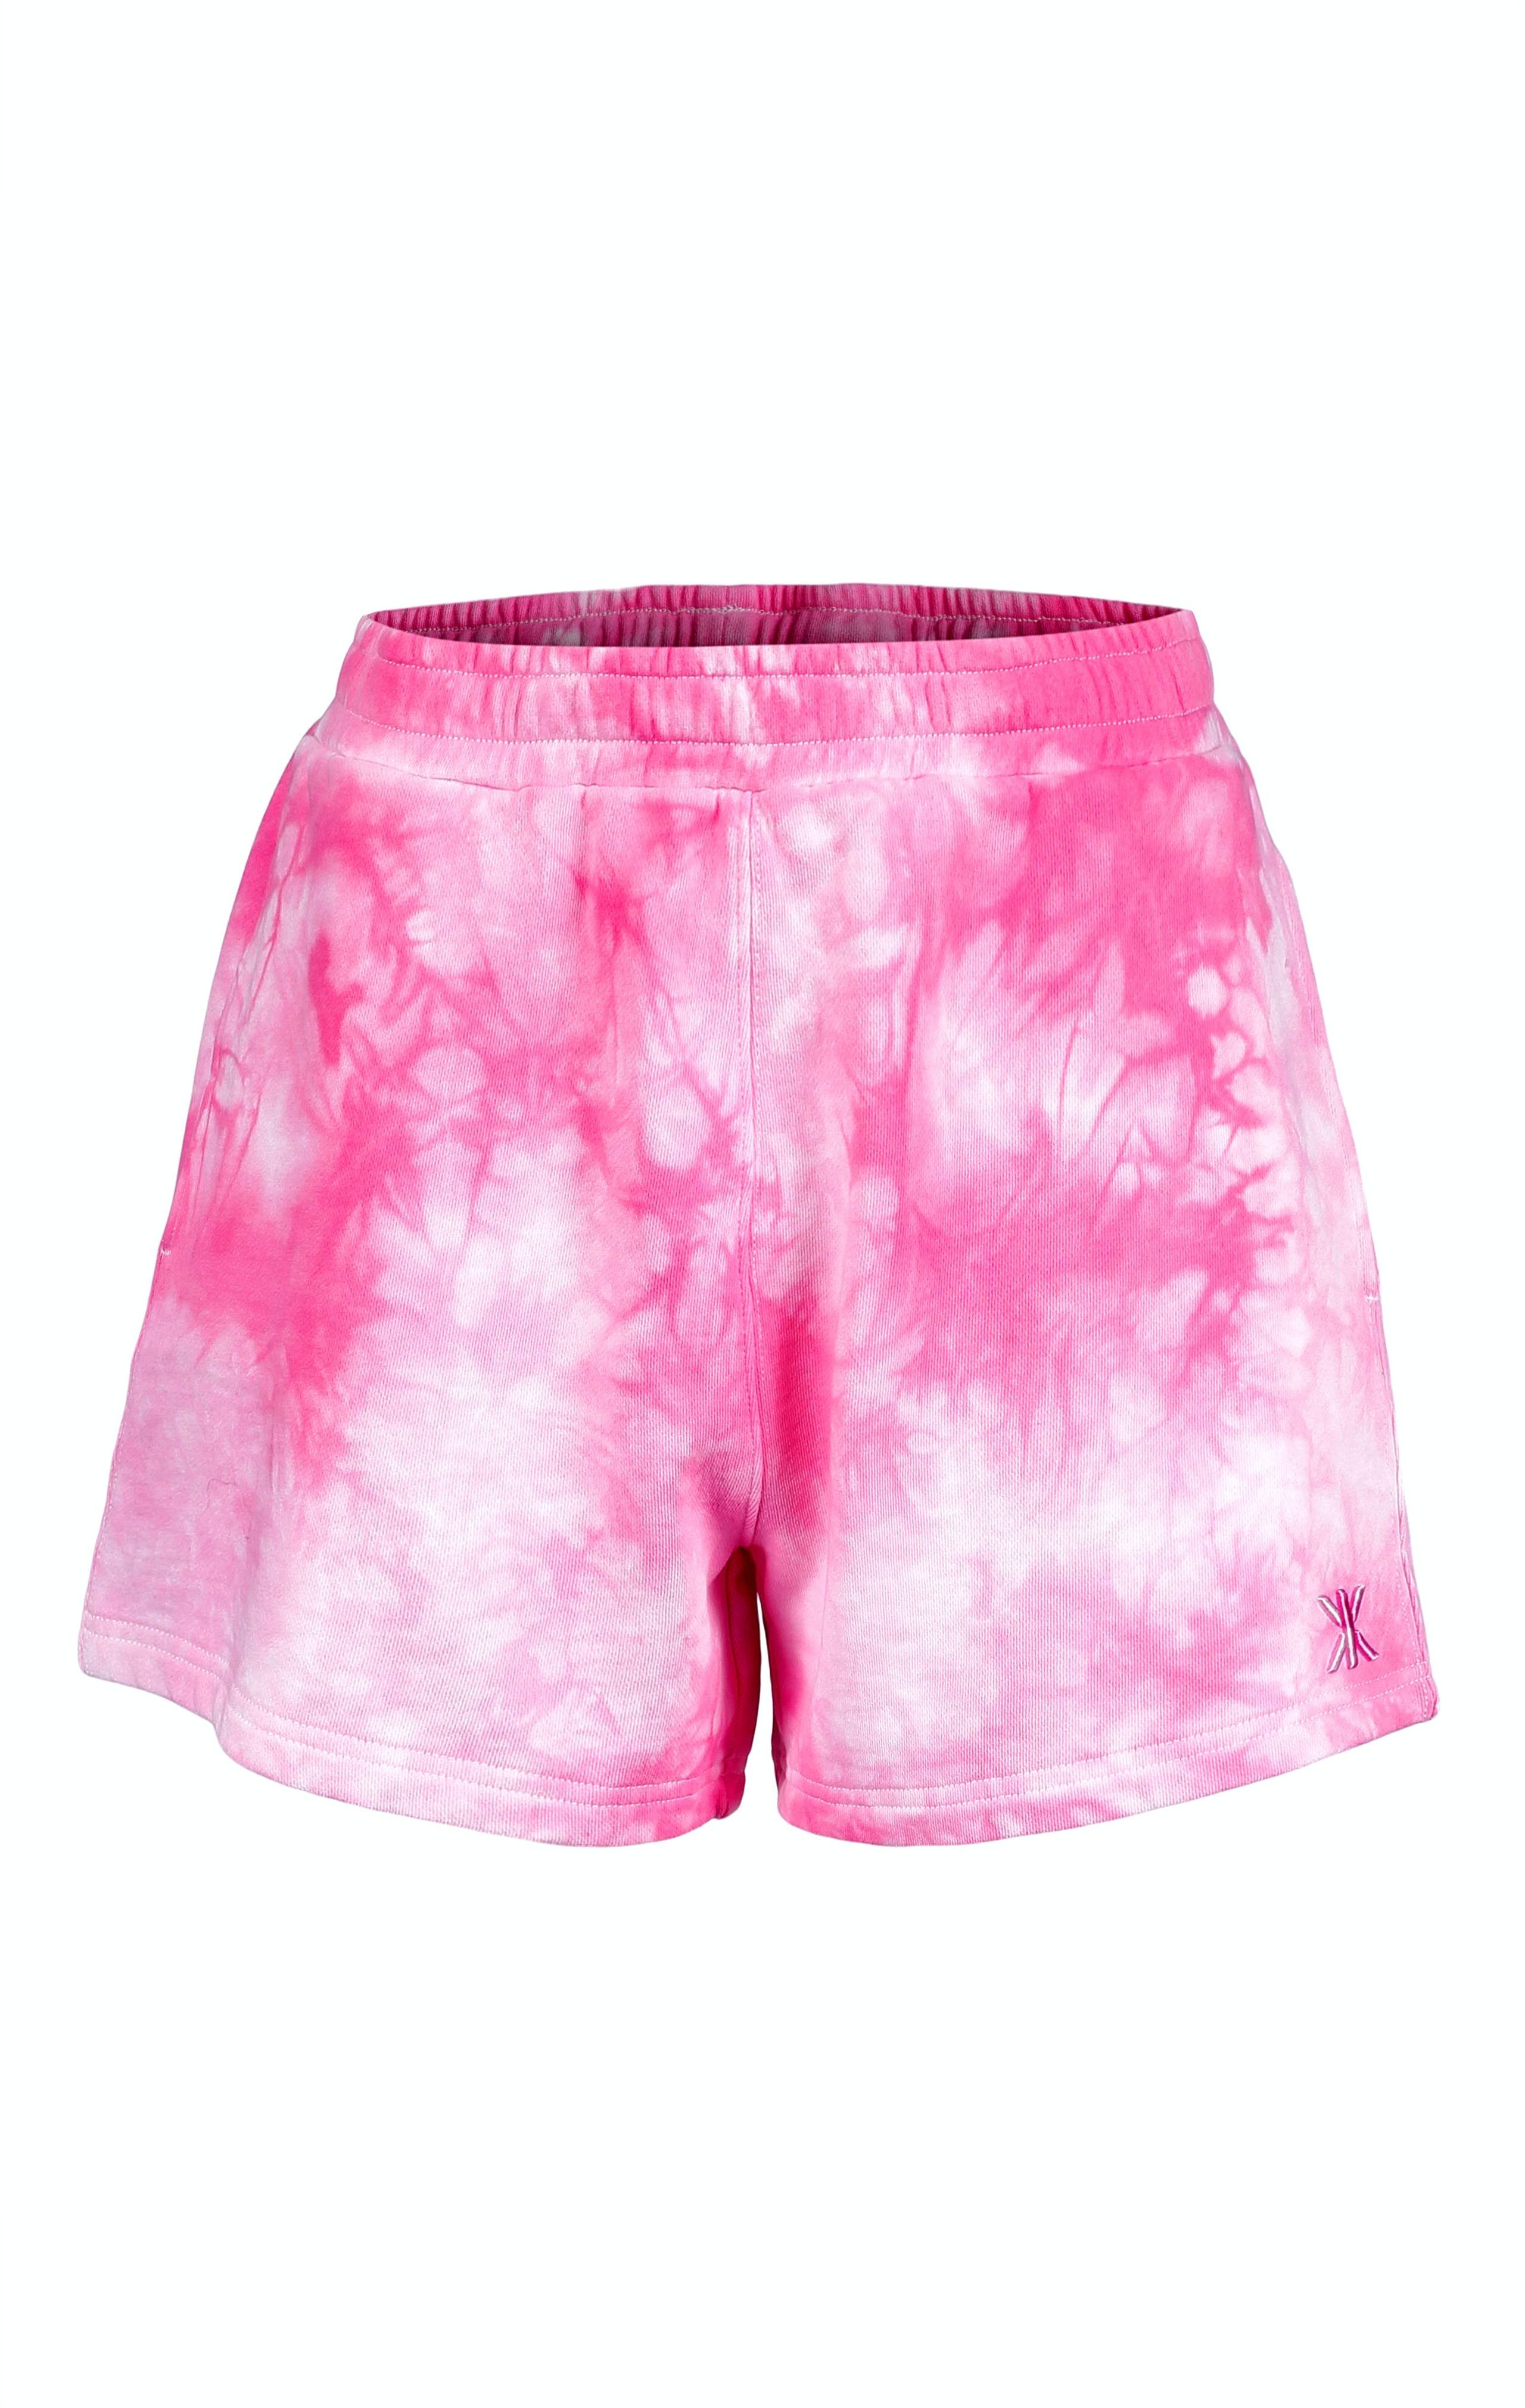 Onepiece Tie Dye Womens Shorts Pink - 1